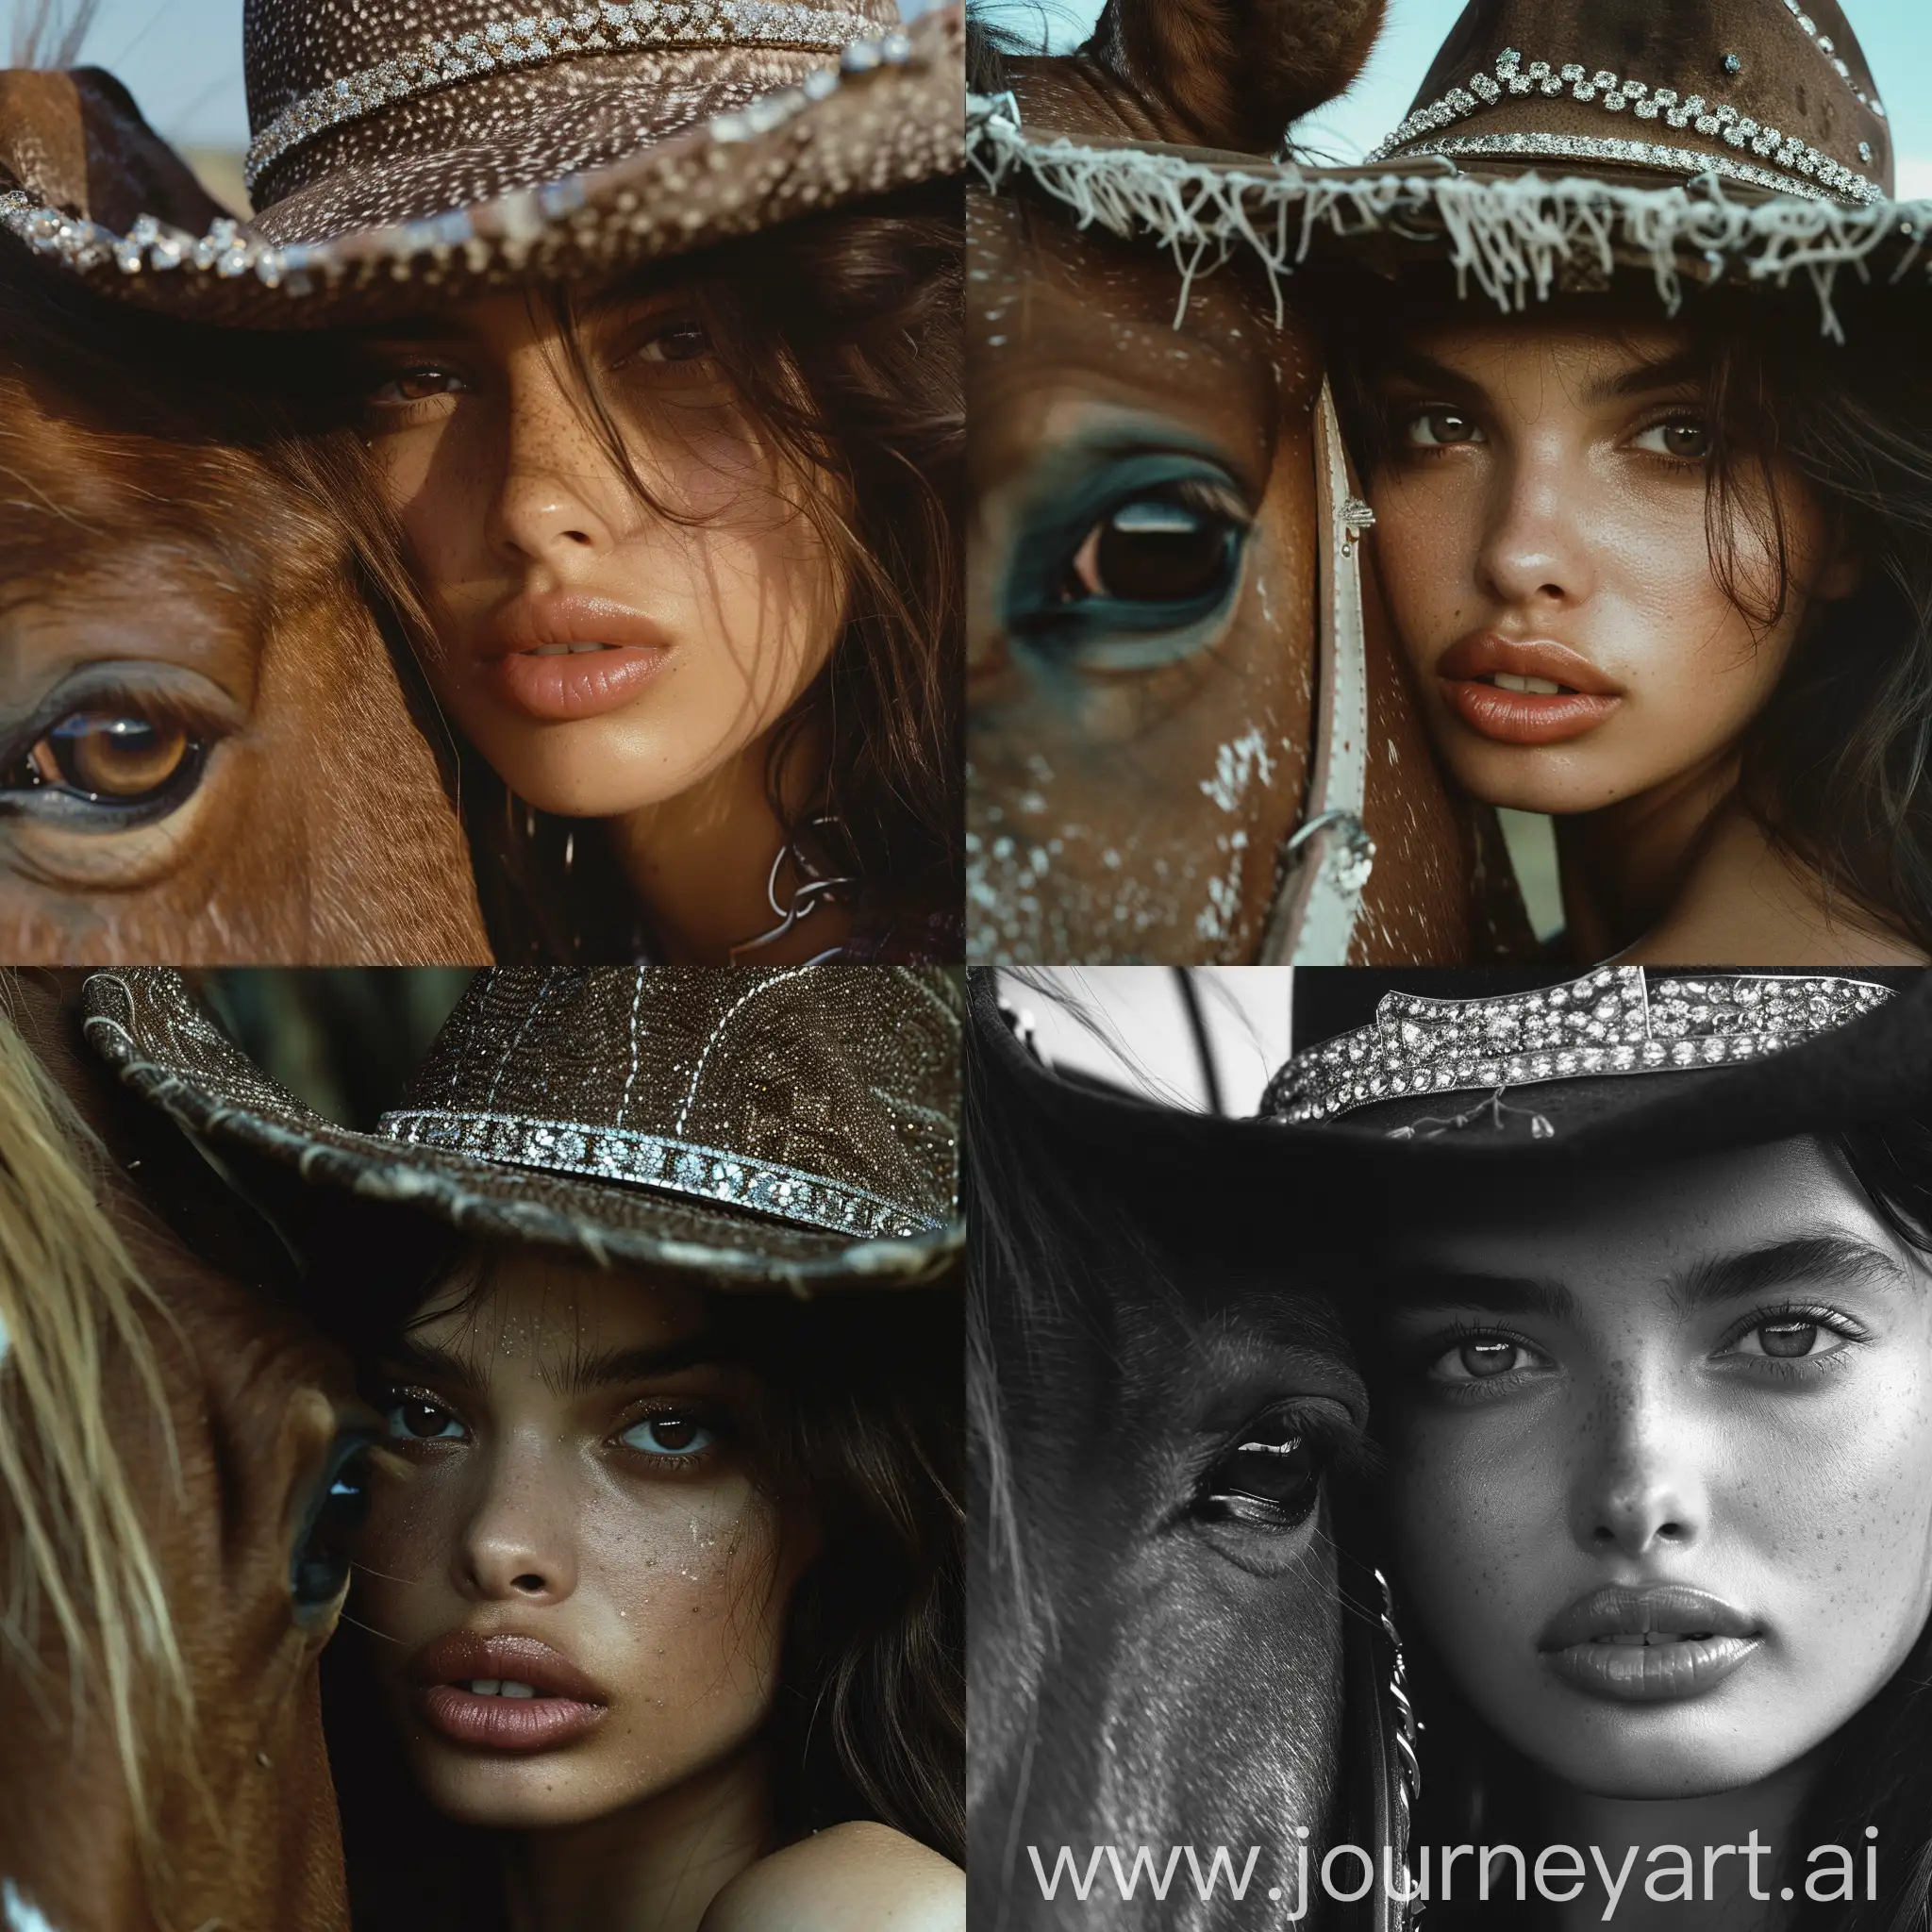 Stylish-Albanian-Model-Poses-with-Diamond-Cowboy-Hat-Next-to-Horse